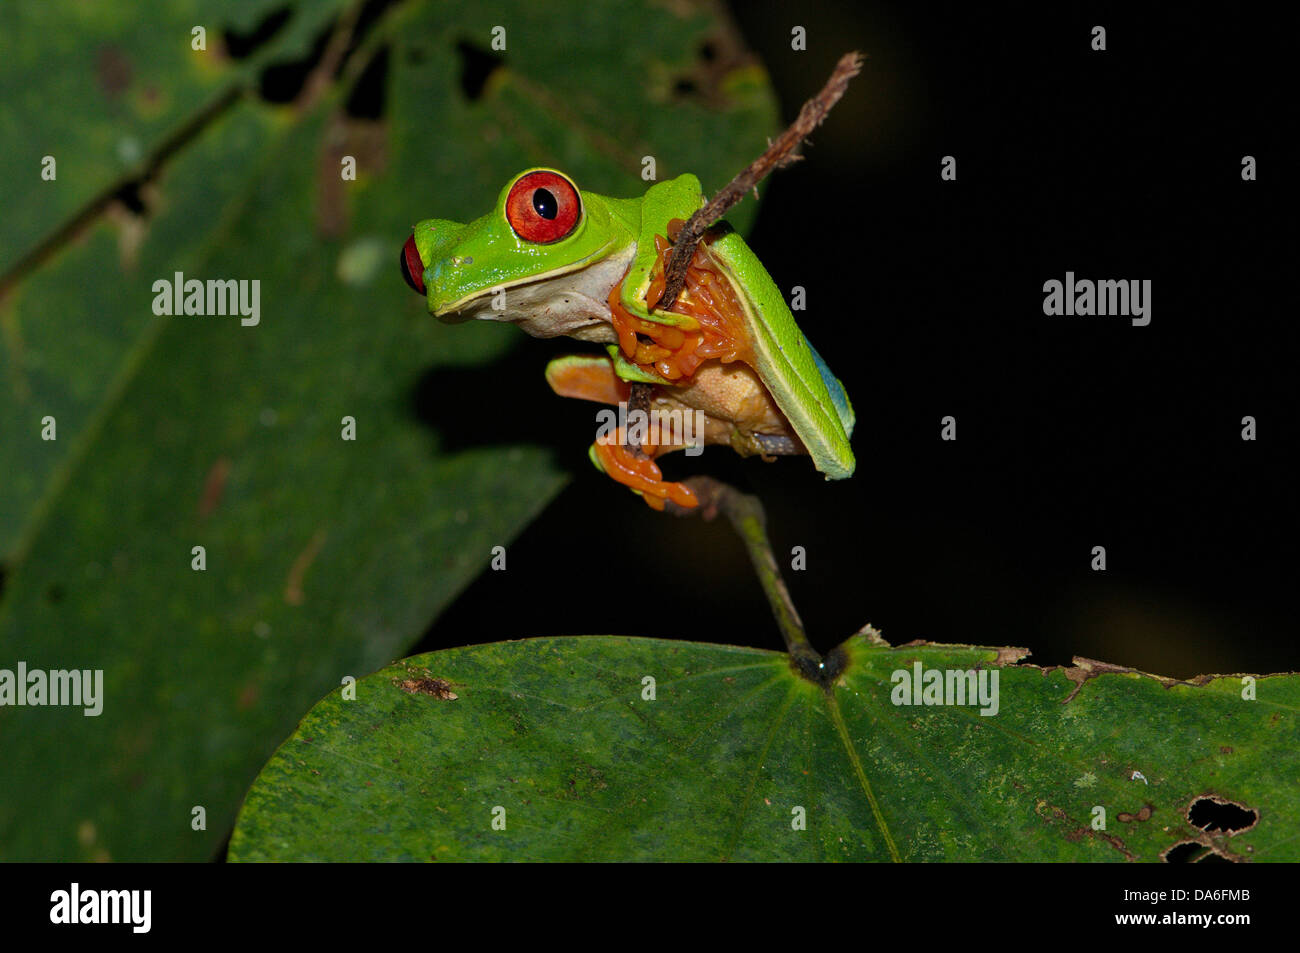 Frog, frogs, tree frog, Red-eyed treefrog, Agalychnis callidryas, Amphibium, Amphibians, tropical, Costa Rica, animal, animals, Stock Photo